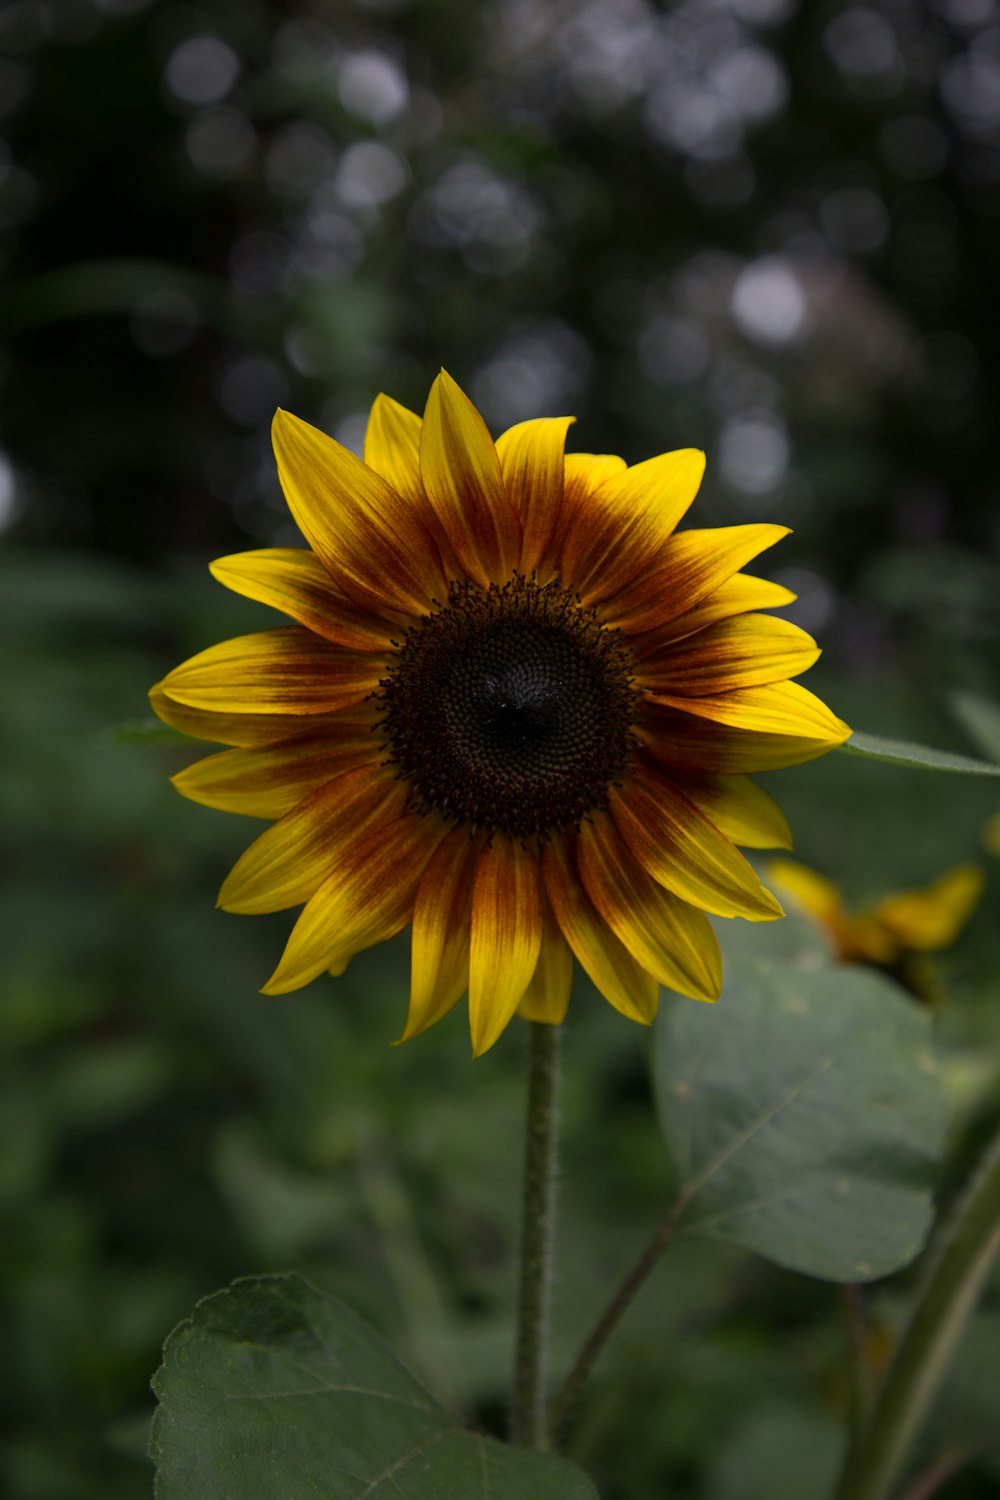 bokeh photography of yellow sunflower